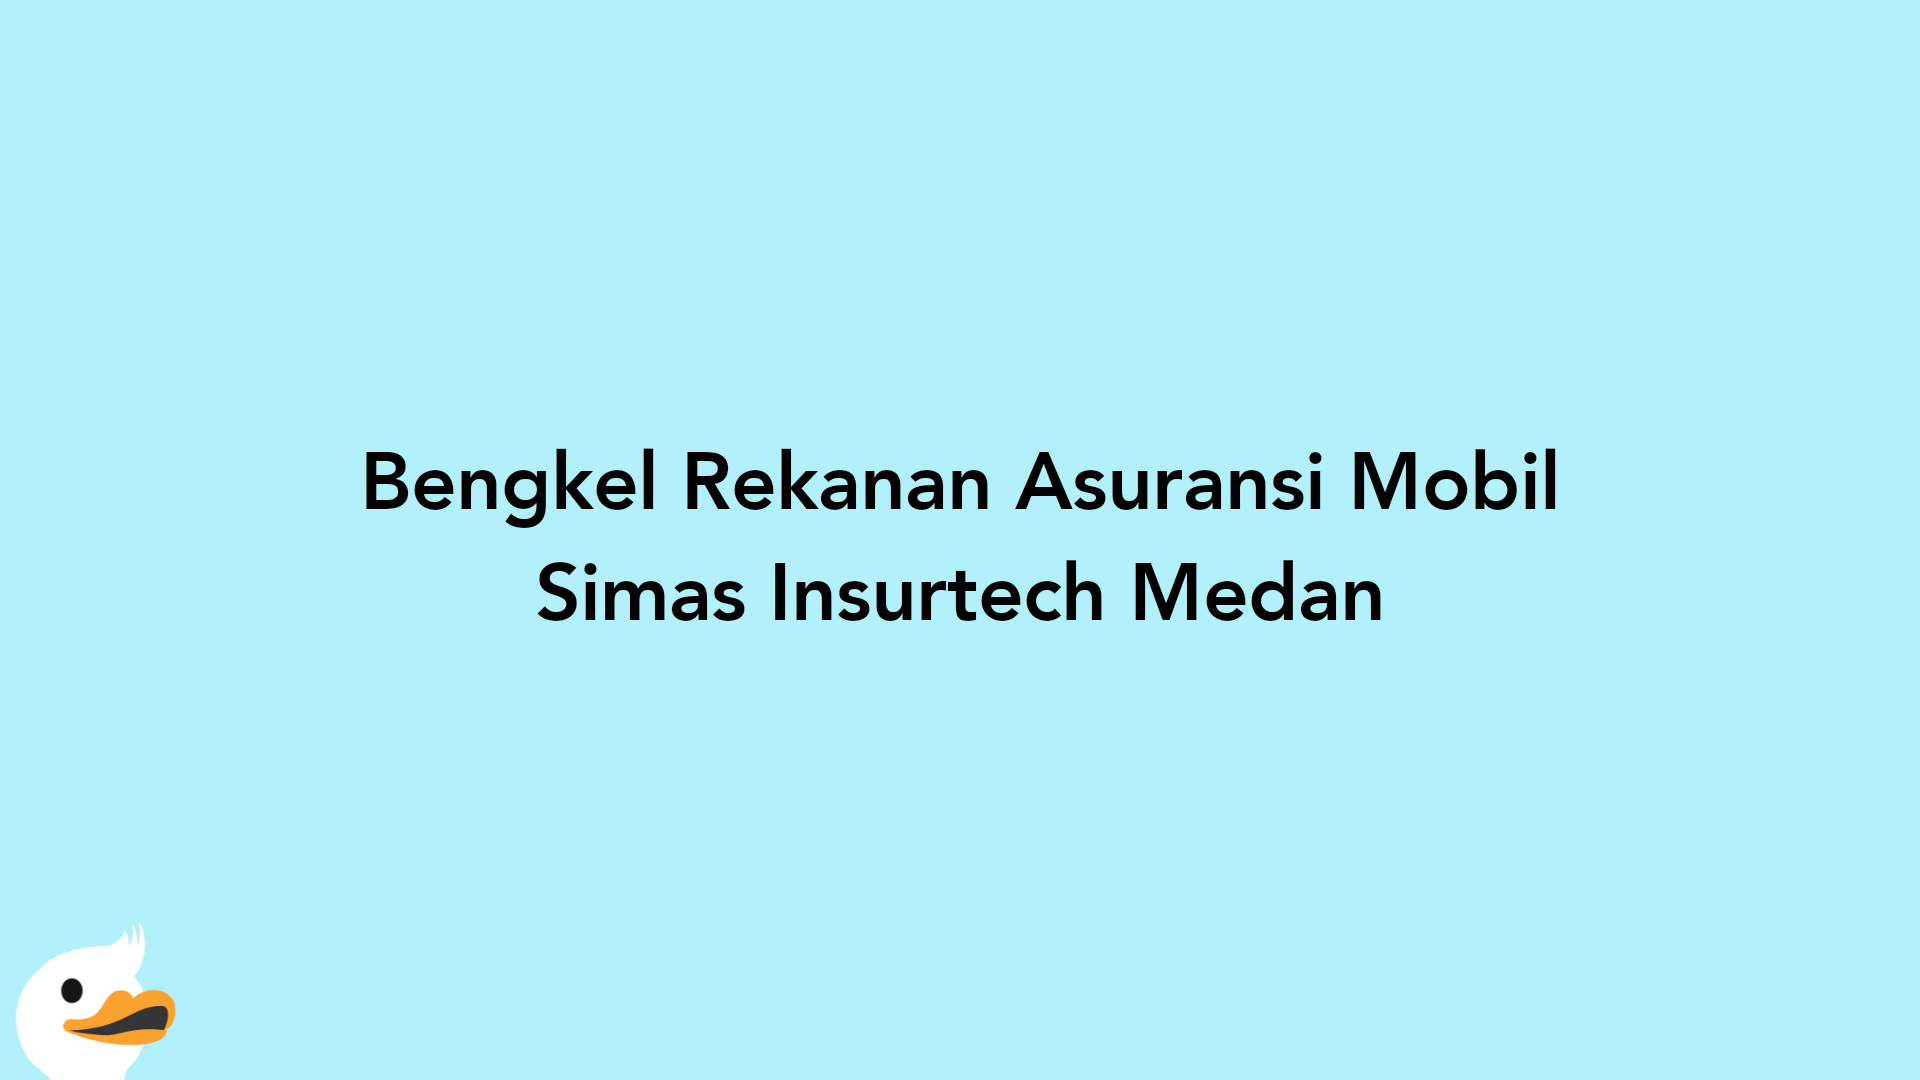 Bengkel Rekanan Asuransi Mobil Simas Insurtech Medan